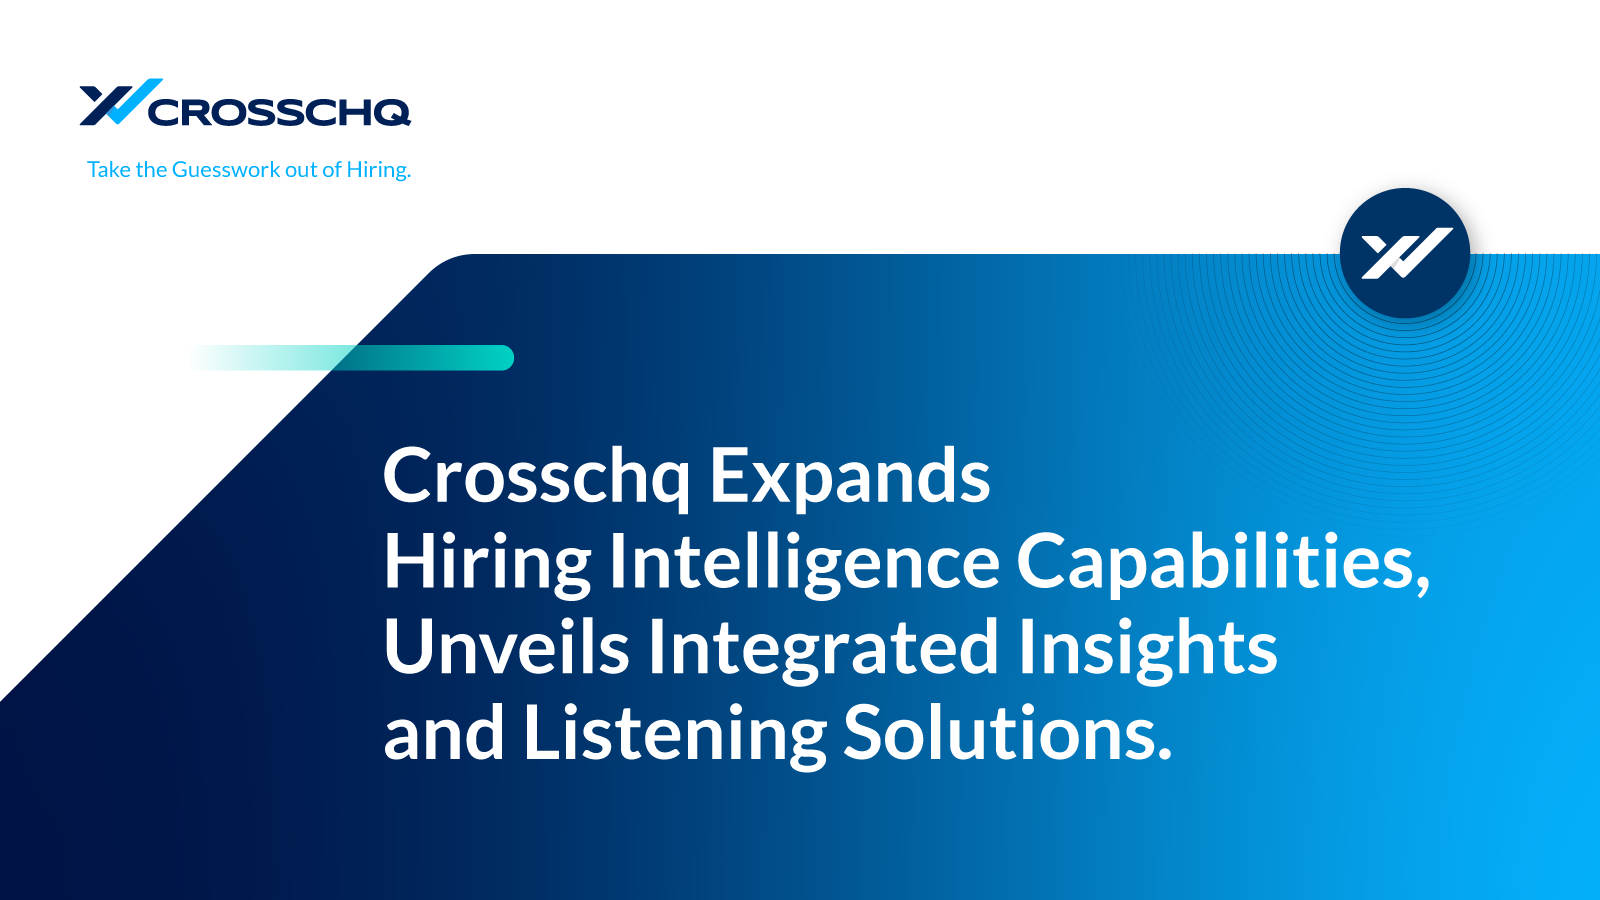 Crosschq Expands Hiring Intelligence Capabilities